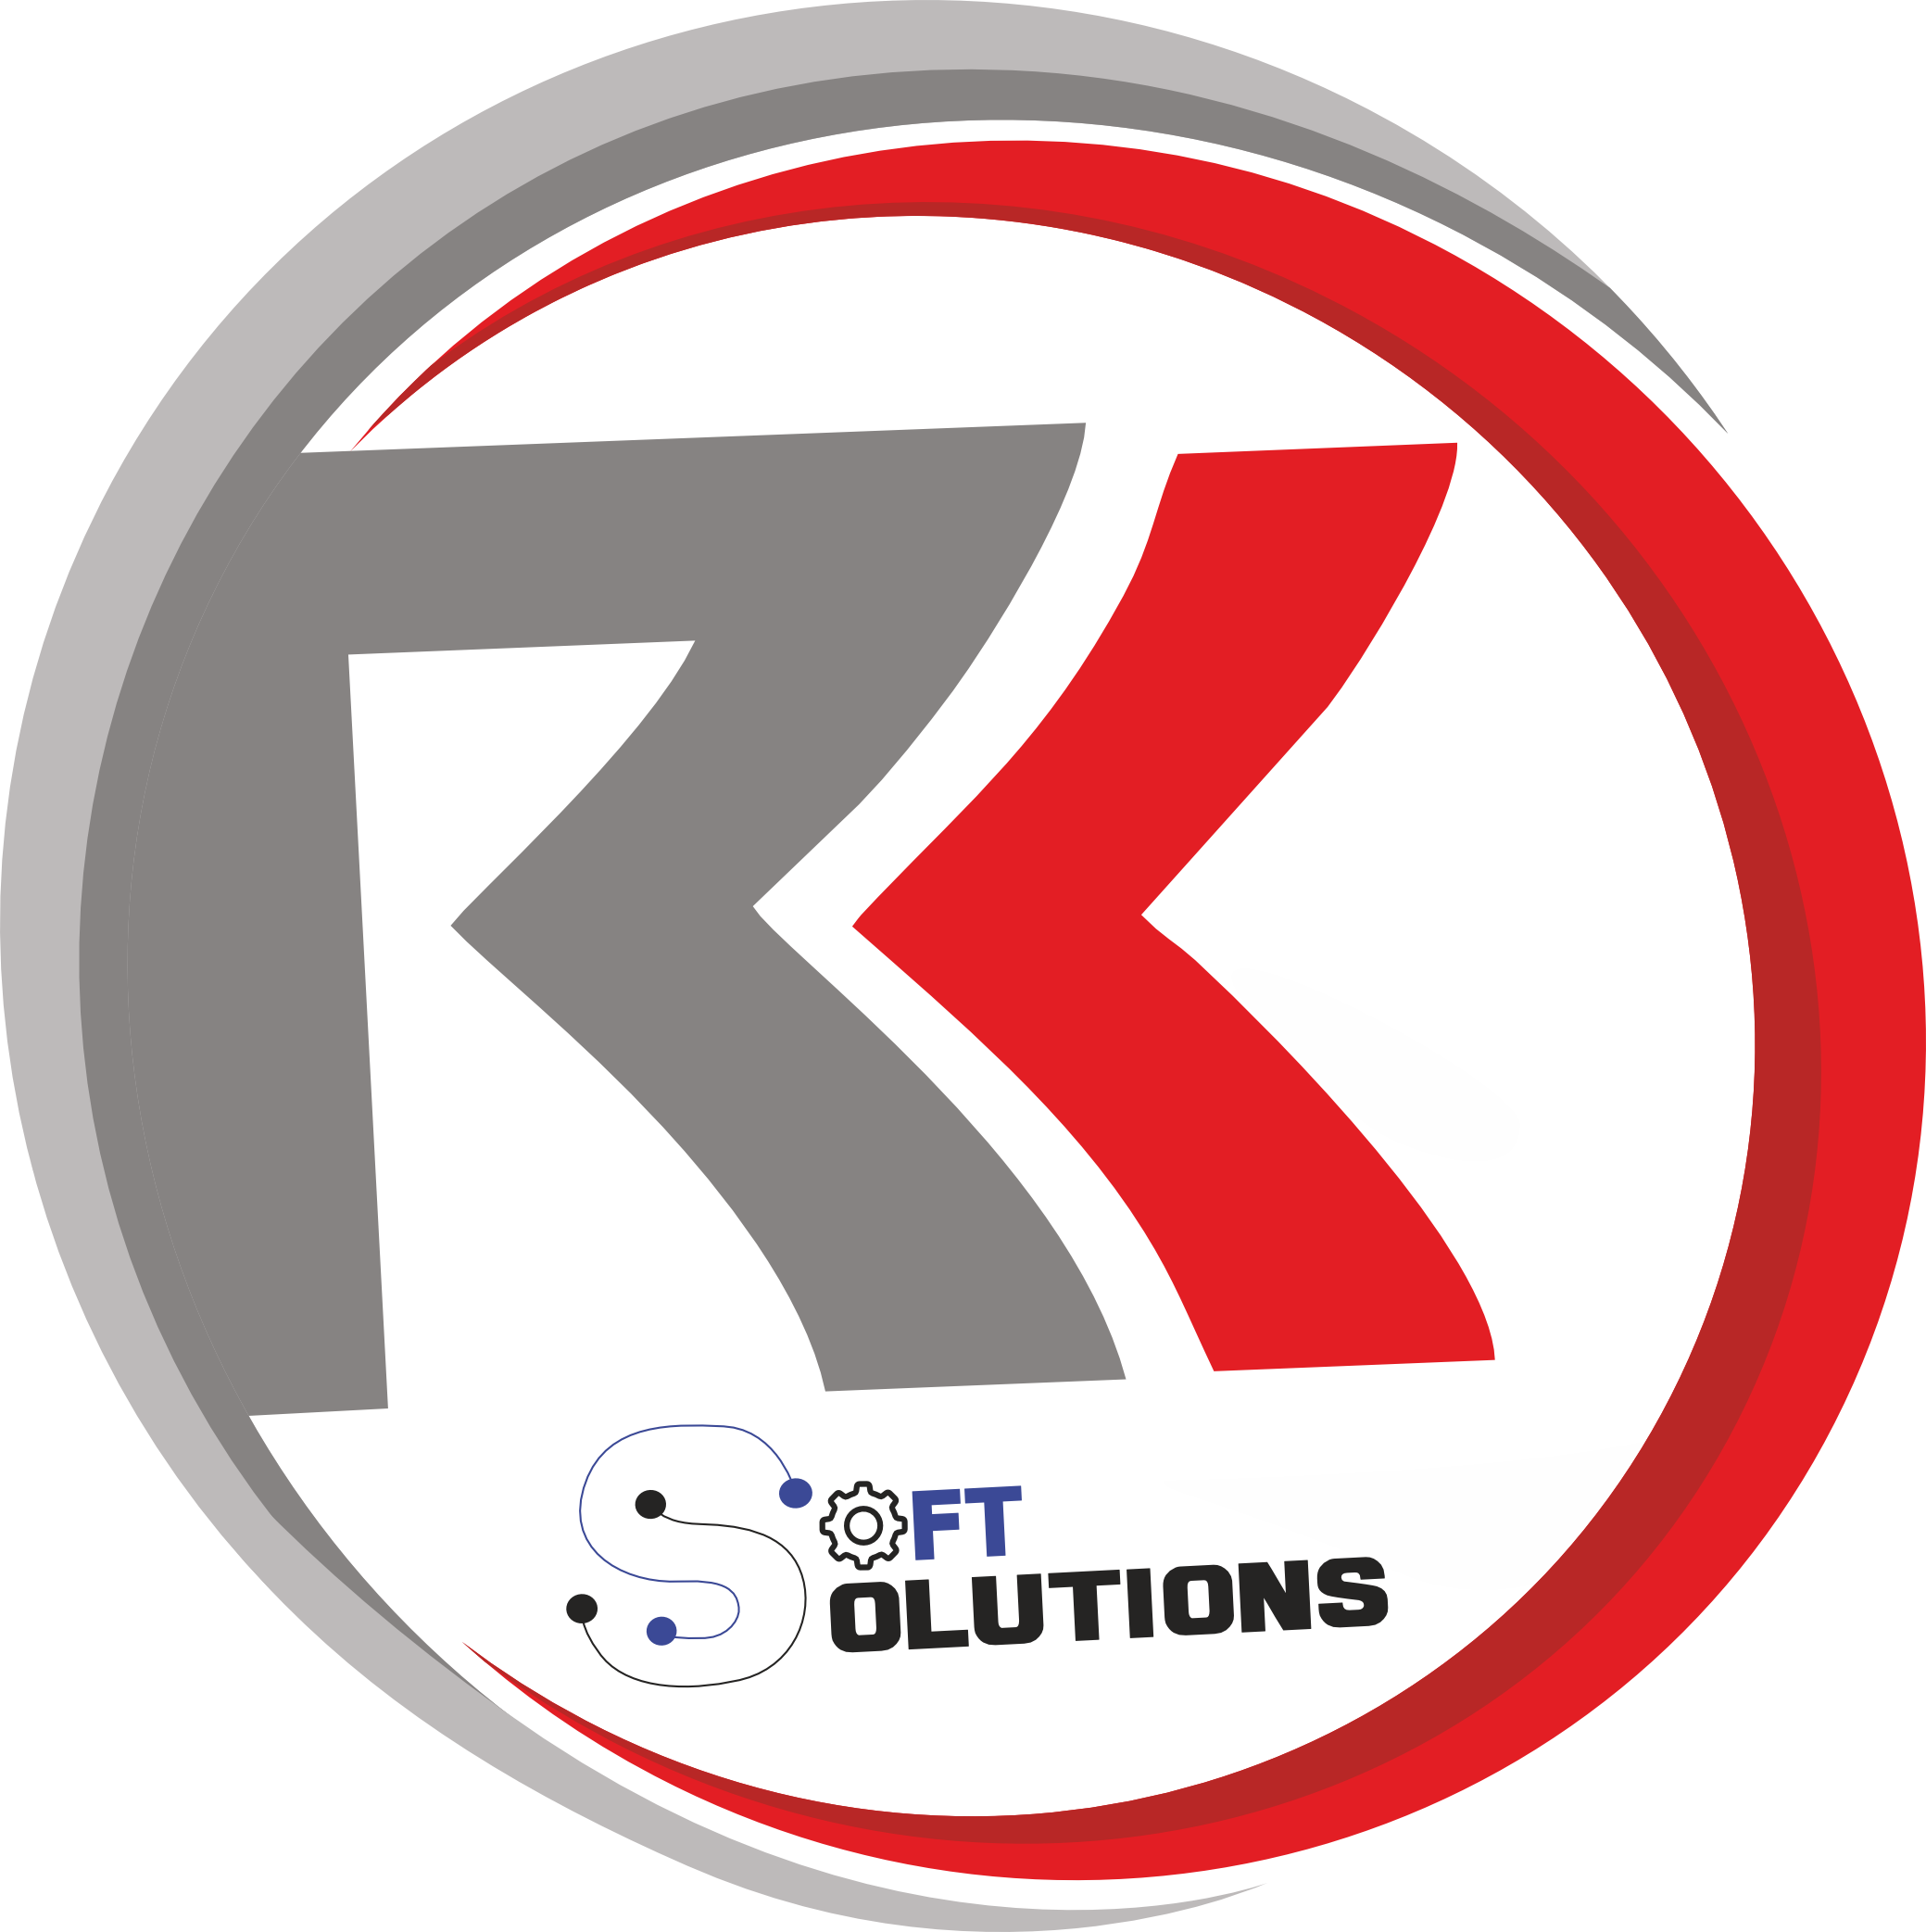 RKSoft Solutions